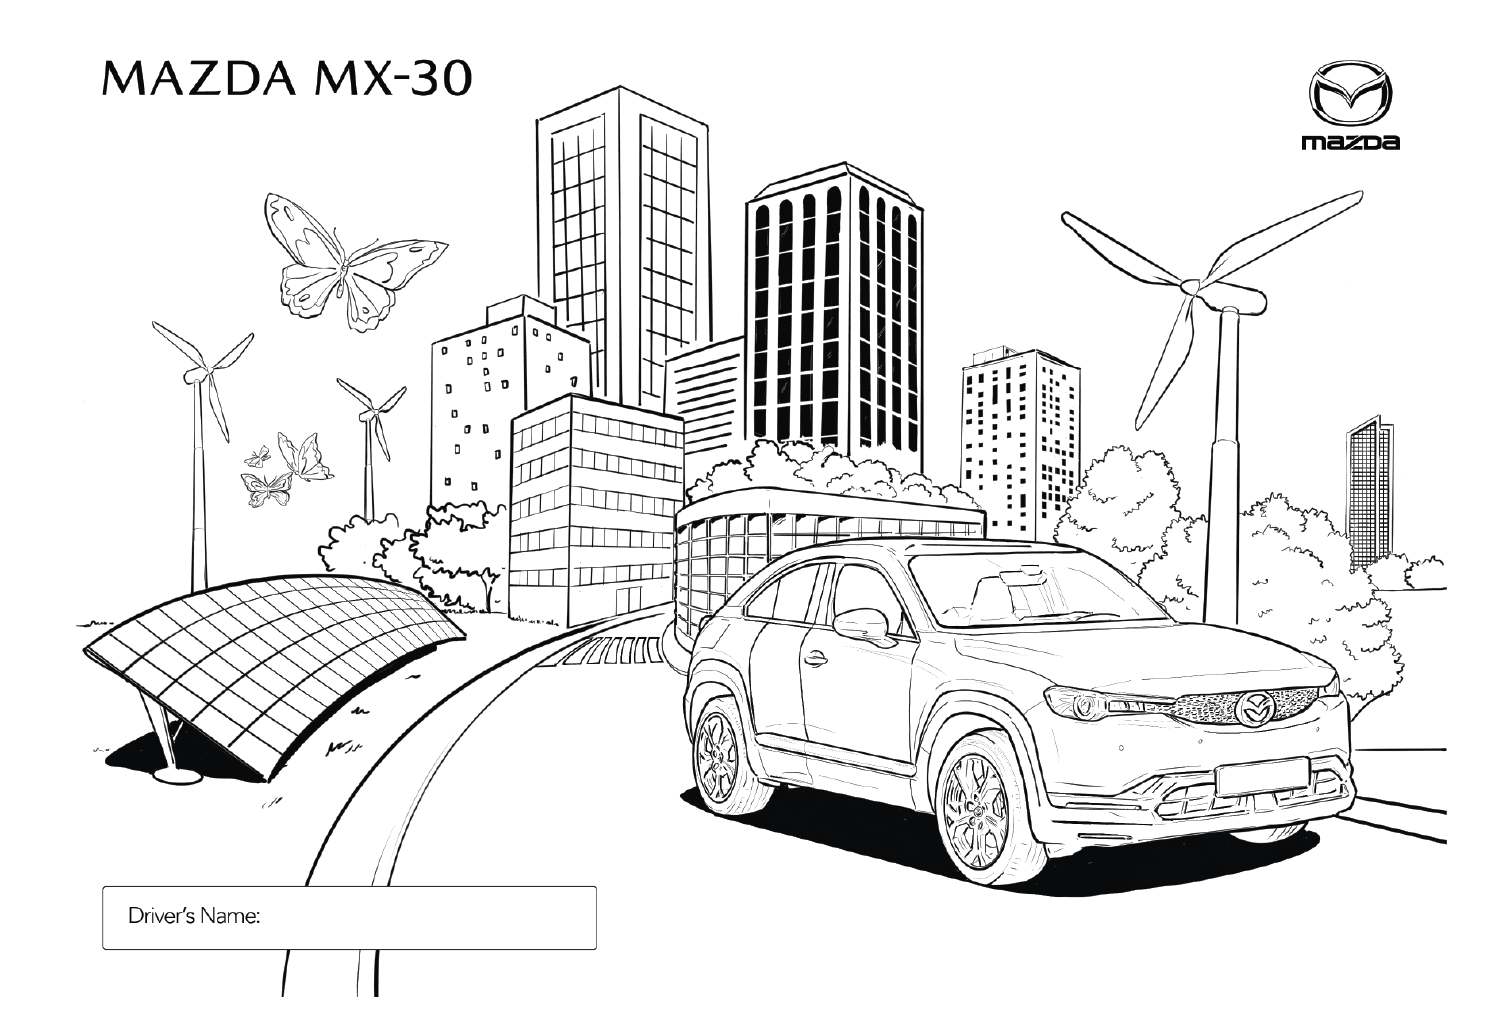 Mazda MX-30 Coloring Page from Mazda